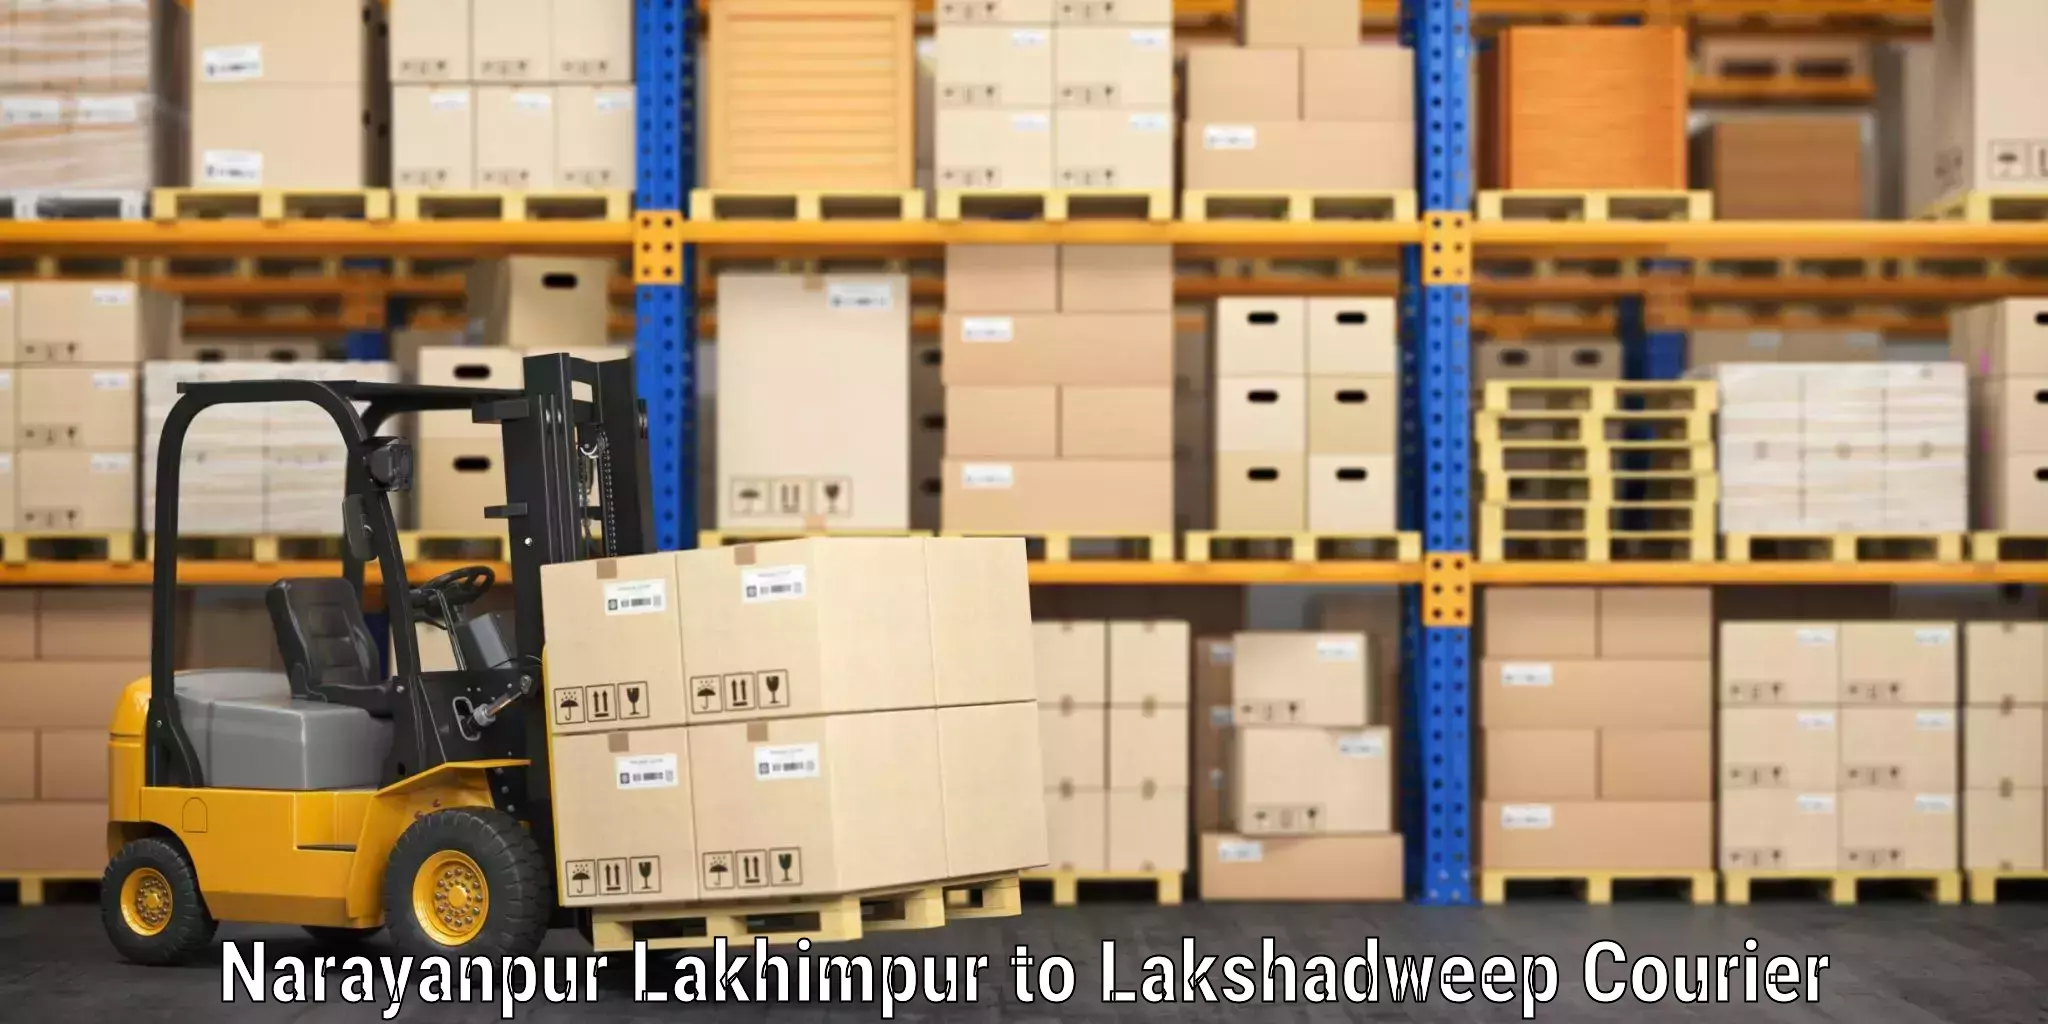 Luggage delivery app Narayanpur Lakhimpur to Lakshadweep